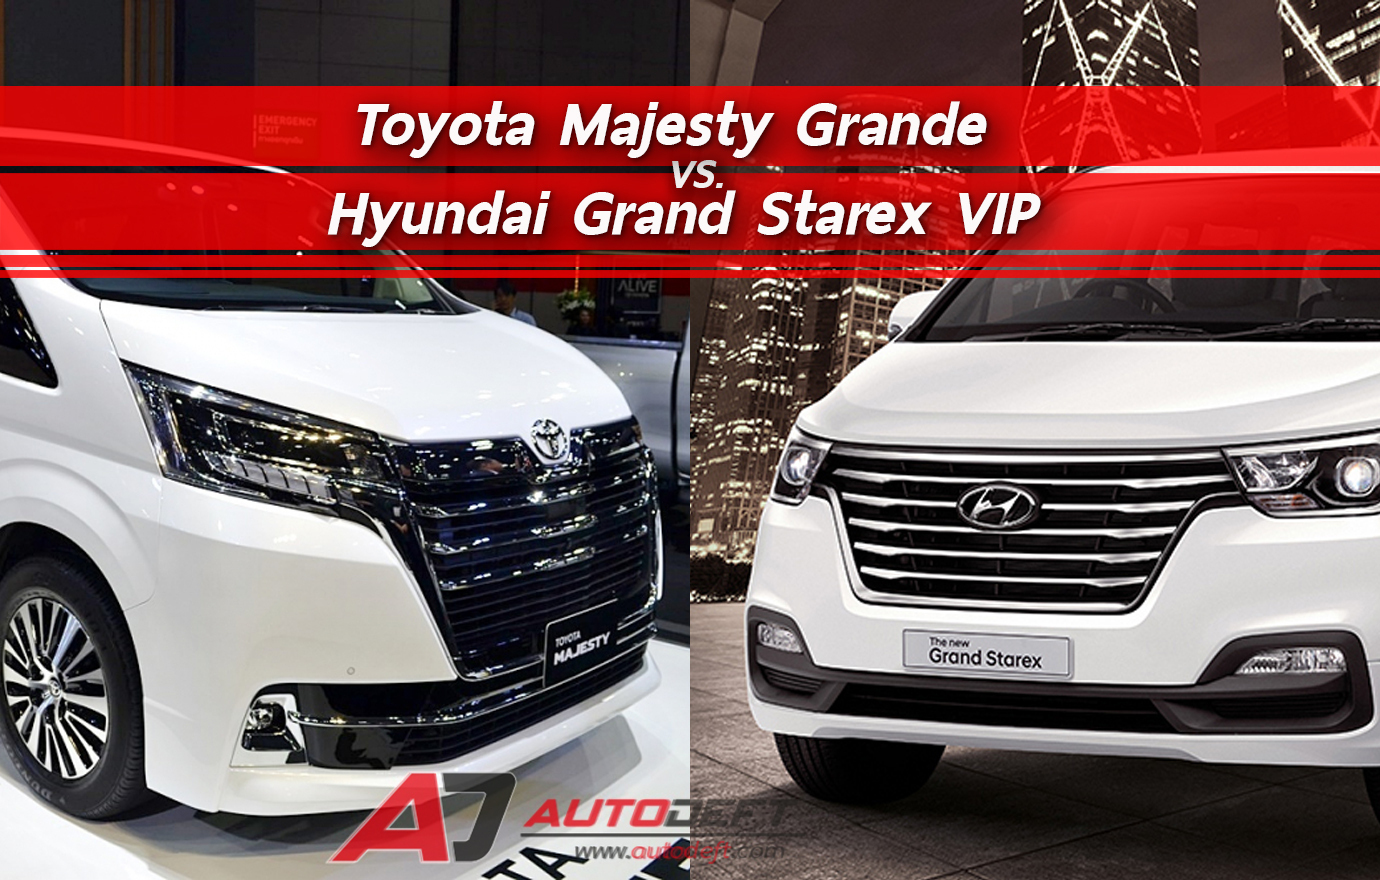 Toyota Majesty Grande VS. Hyundai Grand Starex VIP